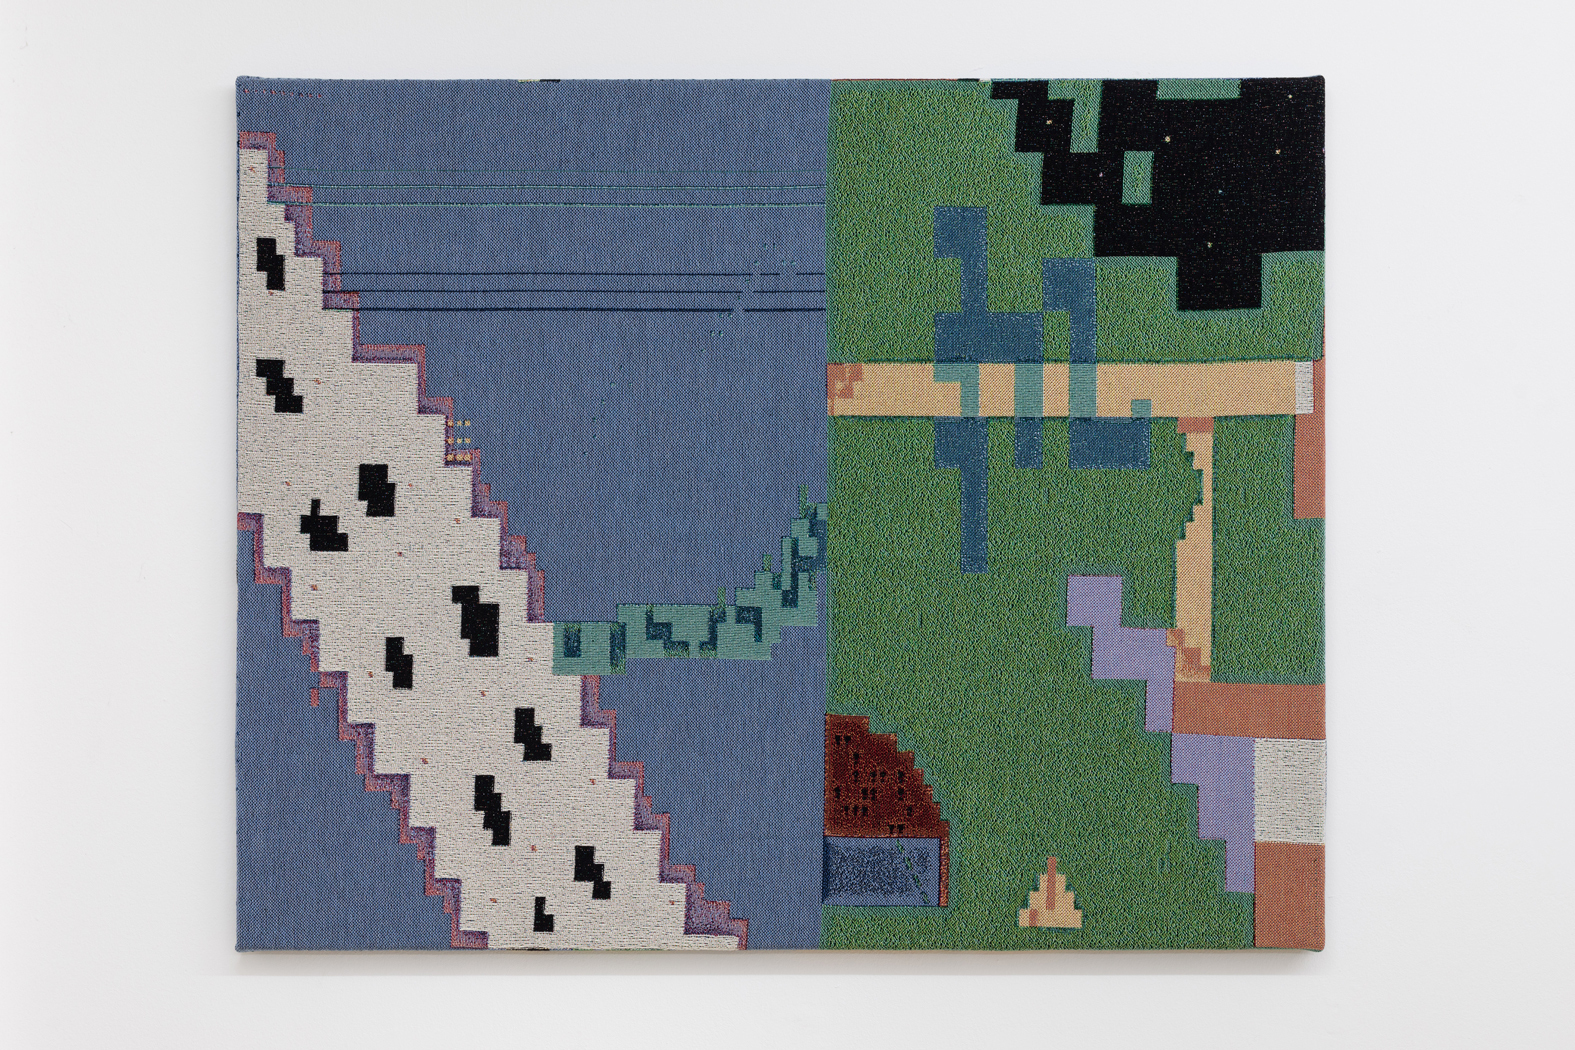 Ernst Markus Stein, innere karte, 2020, Woven wool mounted on wooden frame, 125 cm x 100 cm x 5 cm